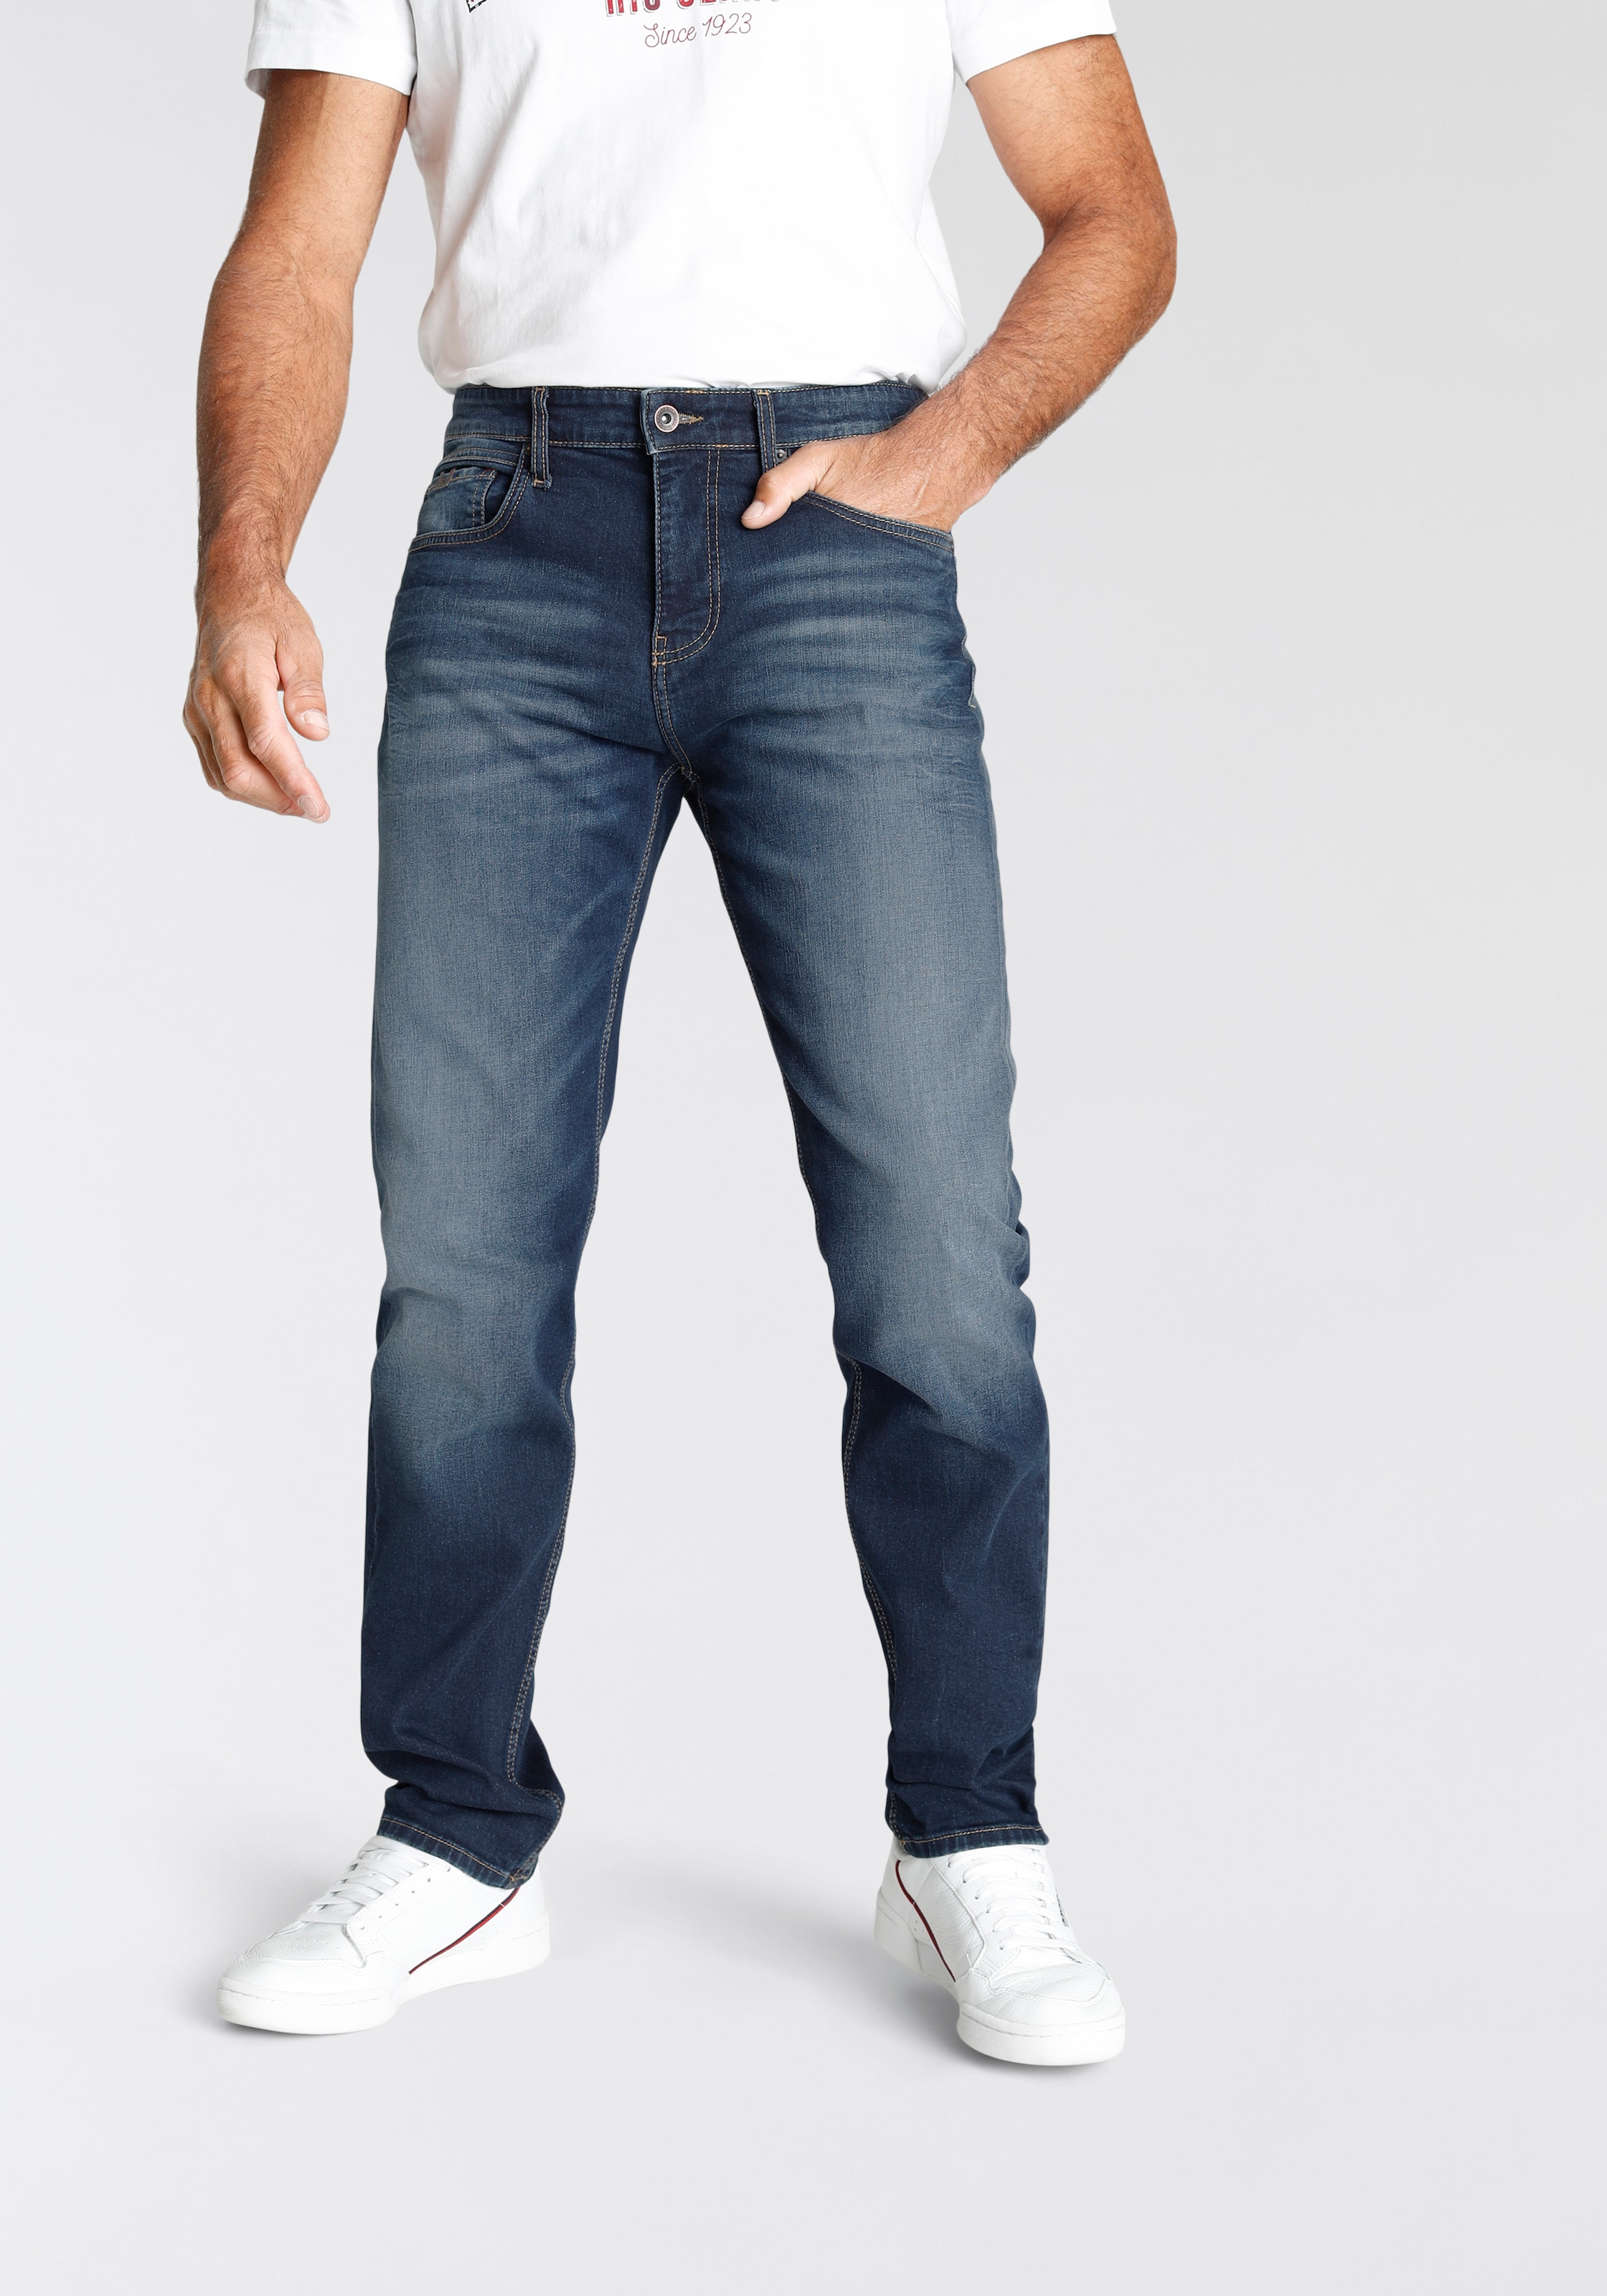 H.I.S Tapered-fit-Jeans "CIAN", Ökologische, wassersparende Produktion durch Ozon Wash